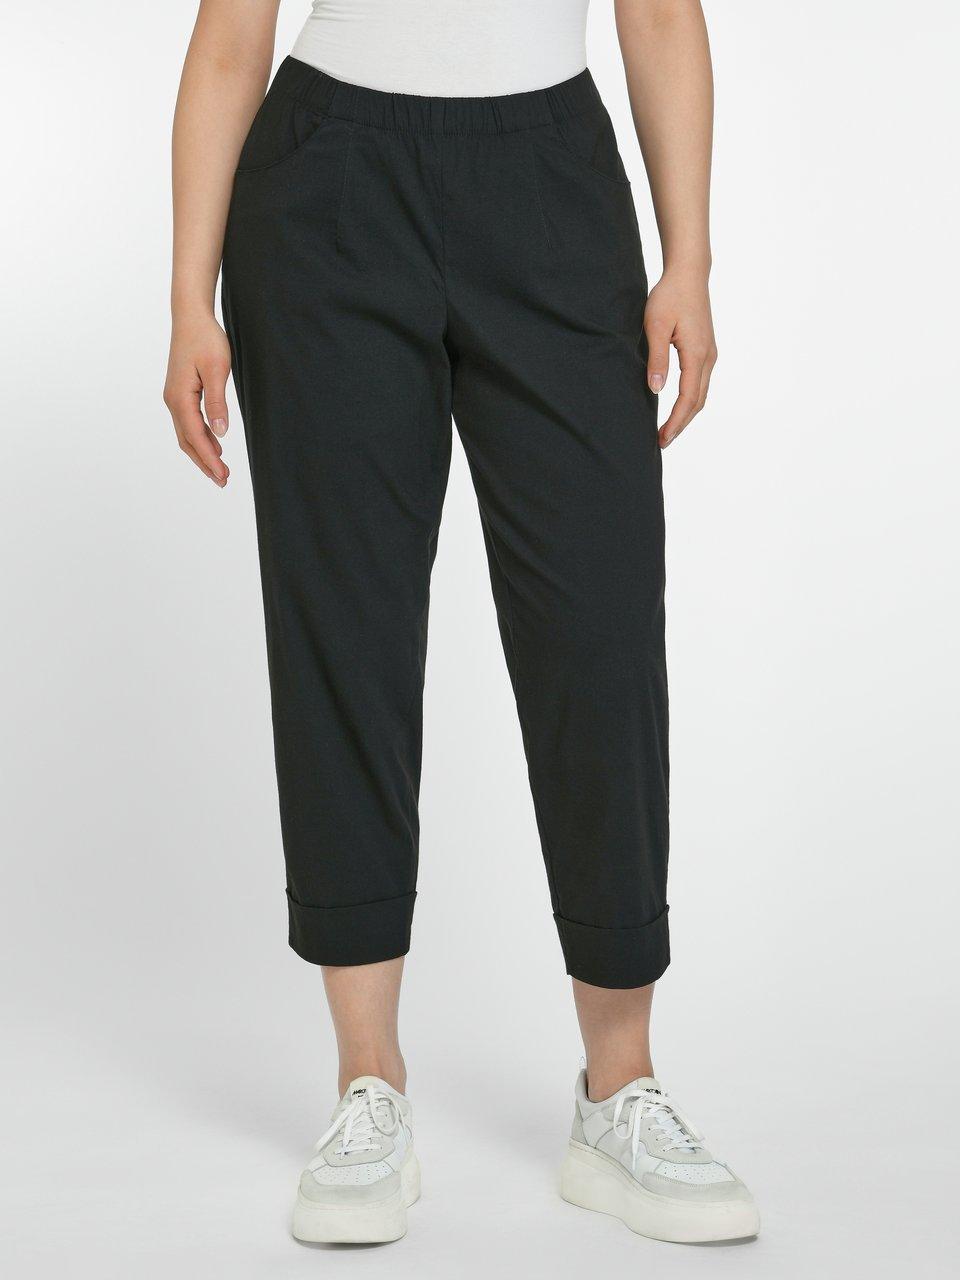 KjBrand - - in Susie 7/8-length trousers fit black